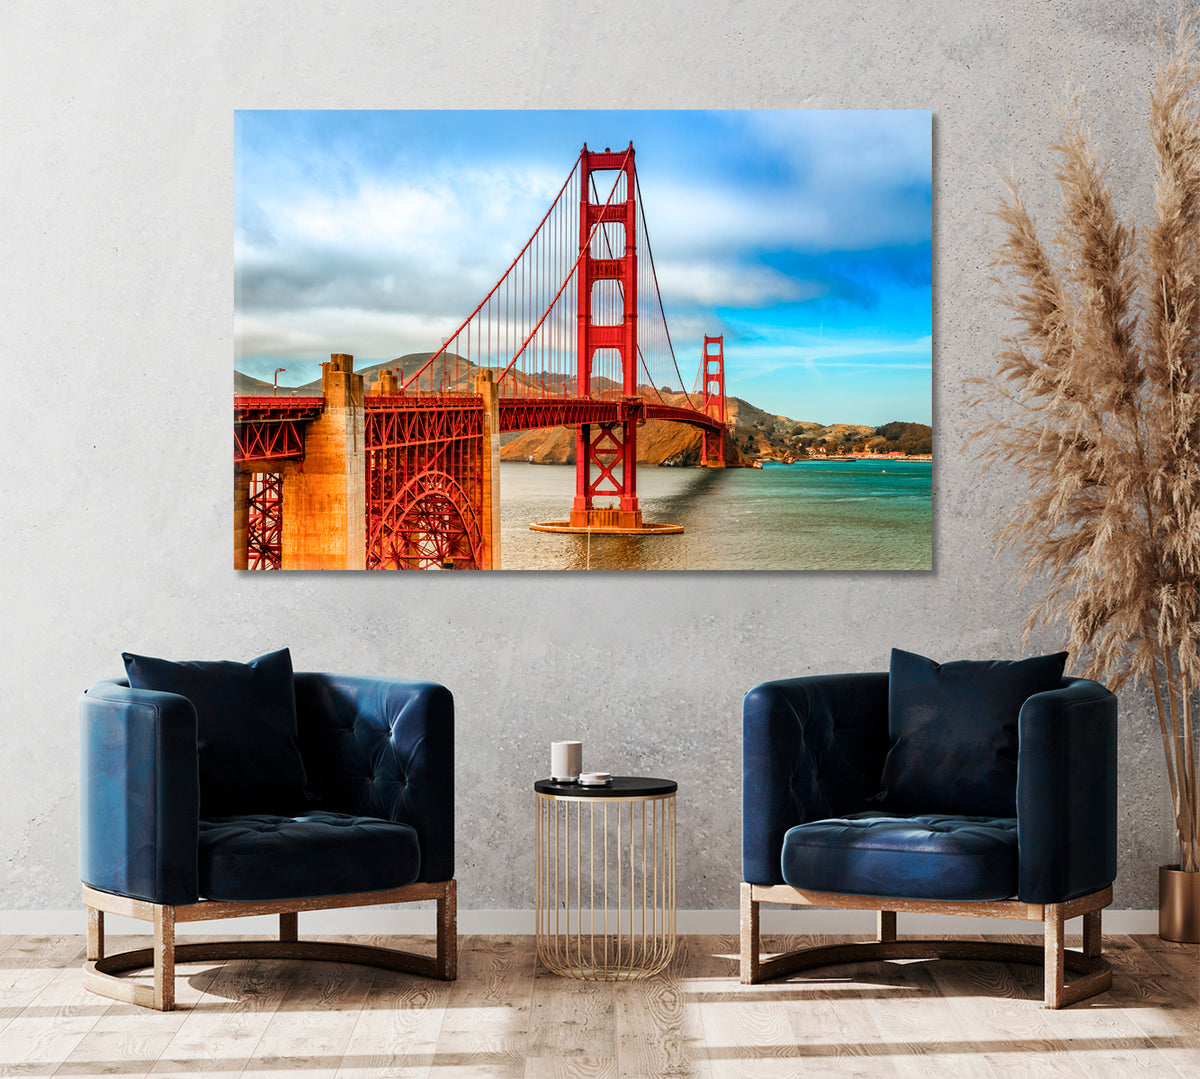 Famous Golden Gate Bridge San Francisco Poster Cities Wall Art Artesty 1 panel 24" x 16" 